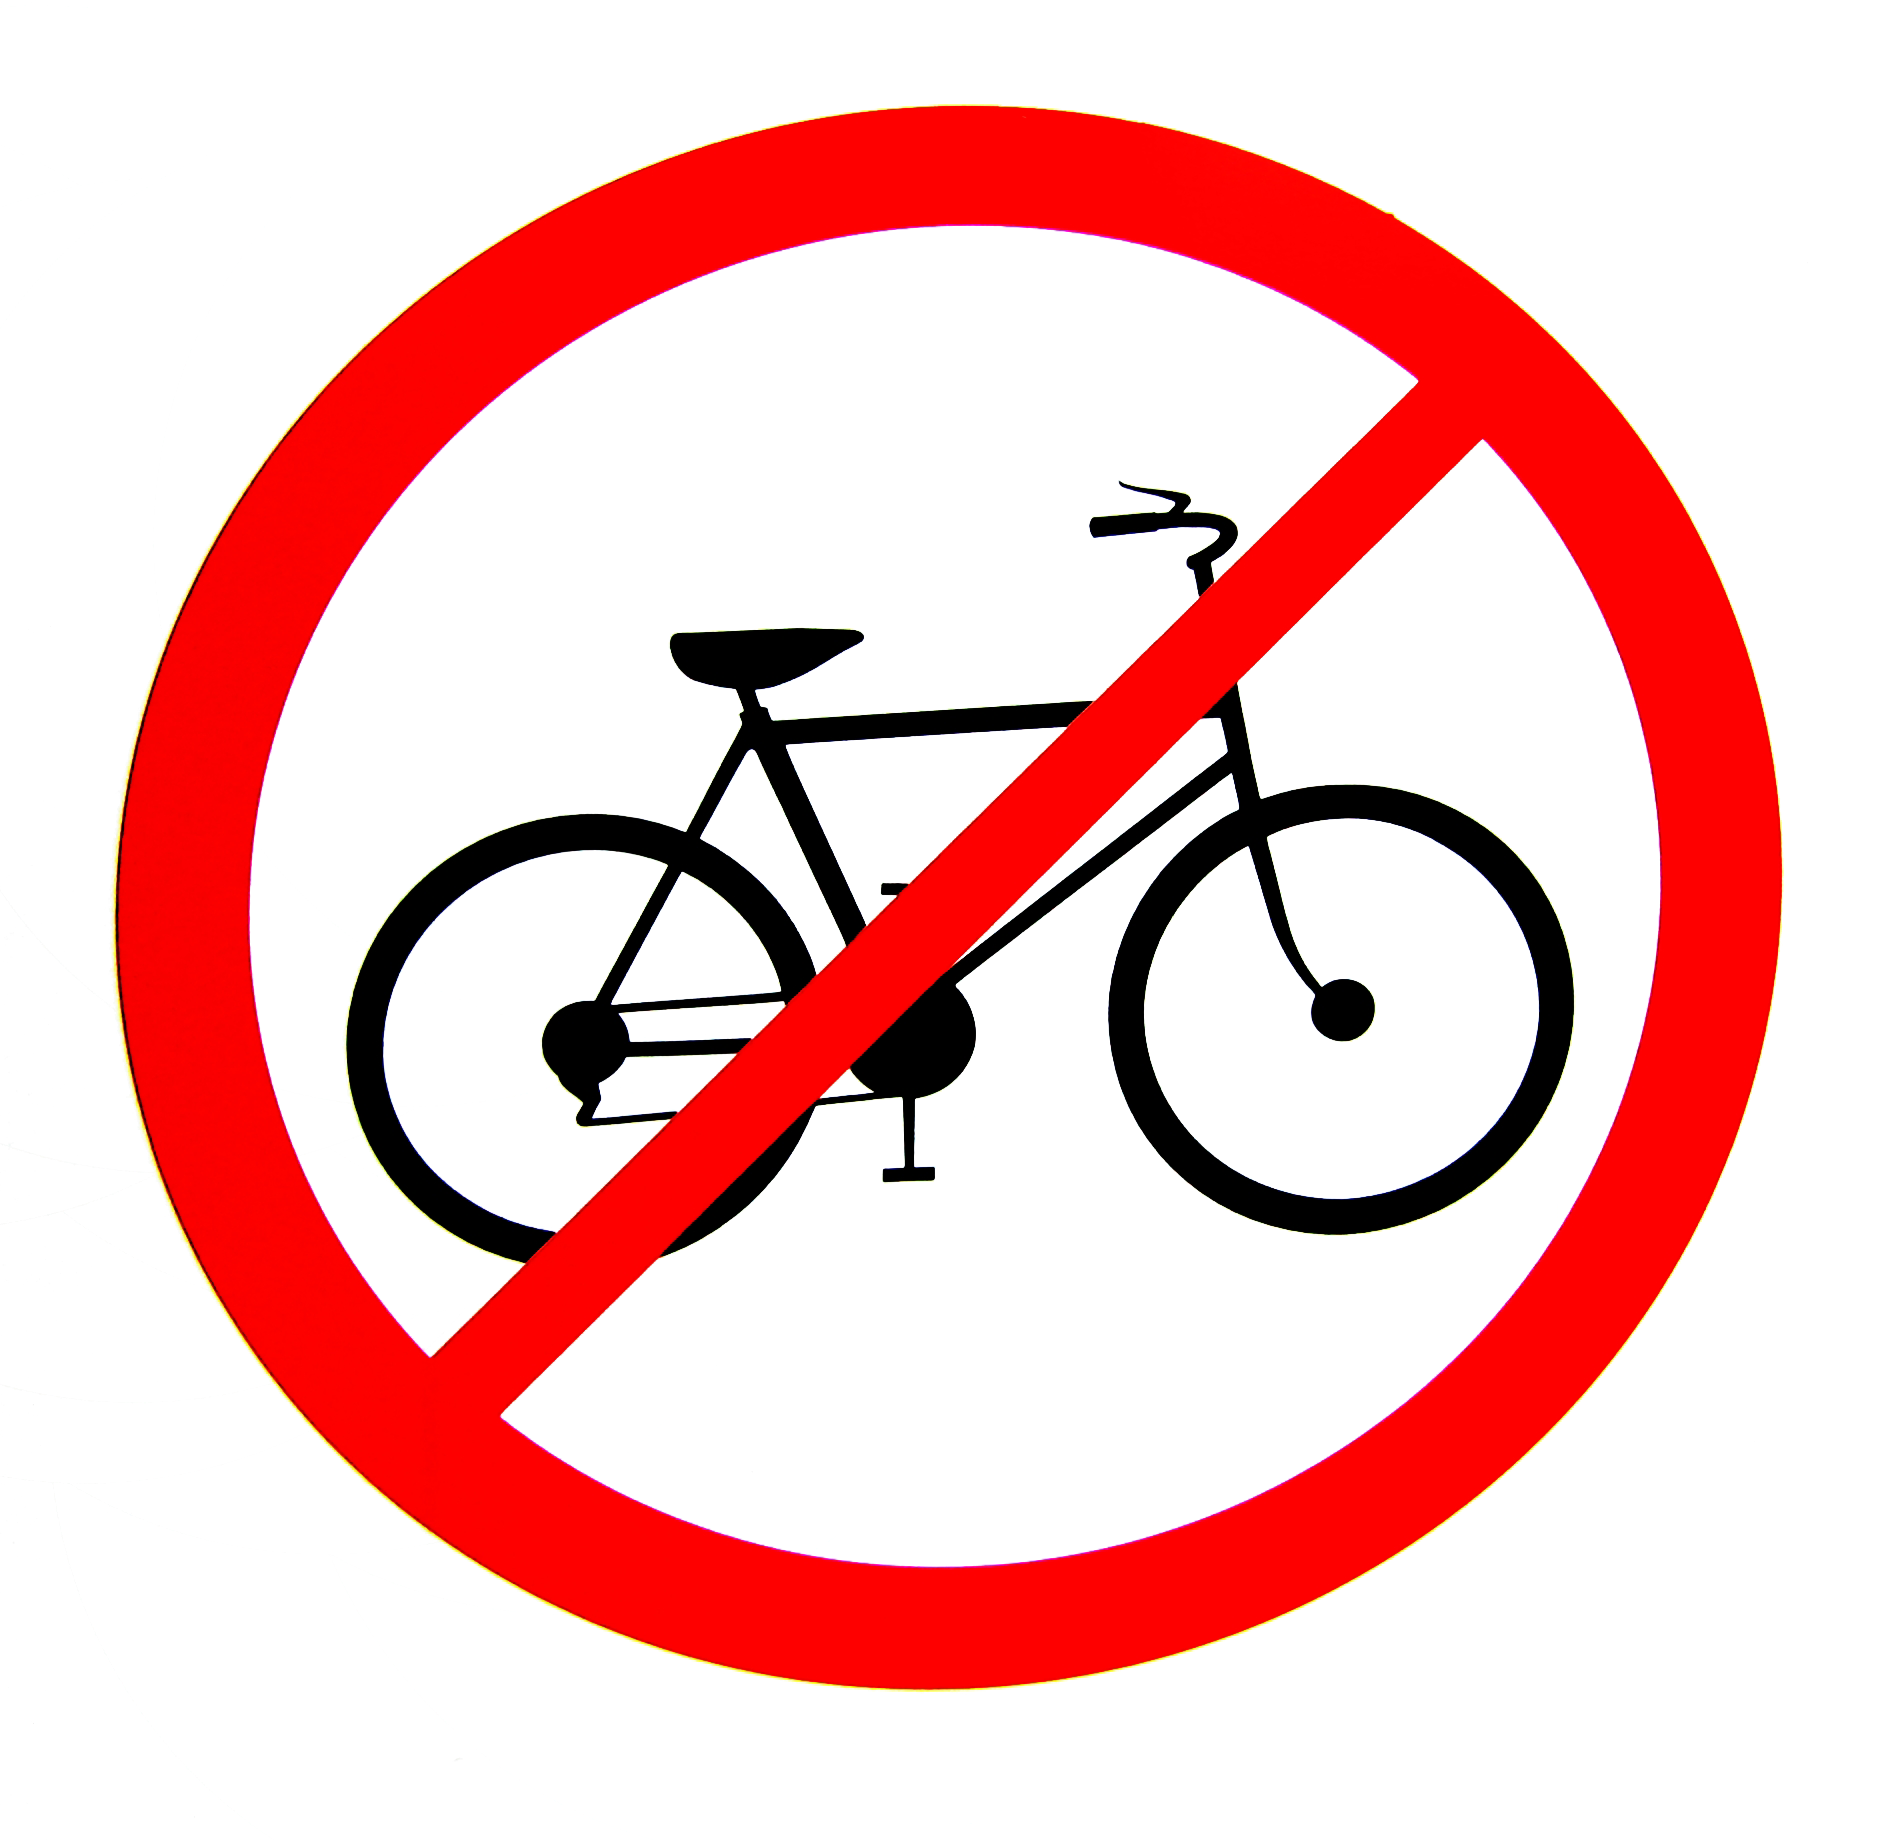 A No Bike Sign